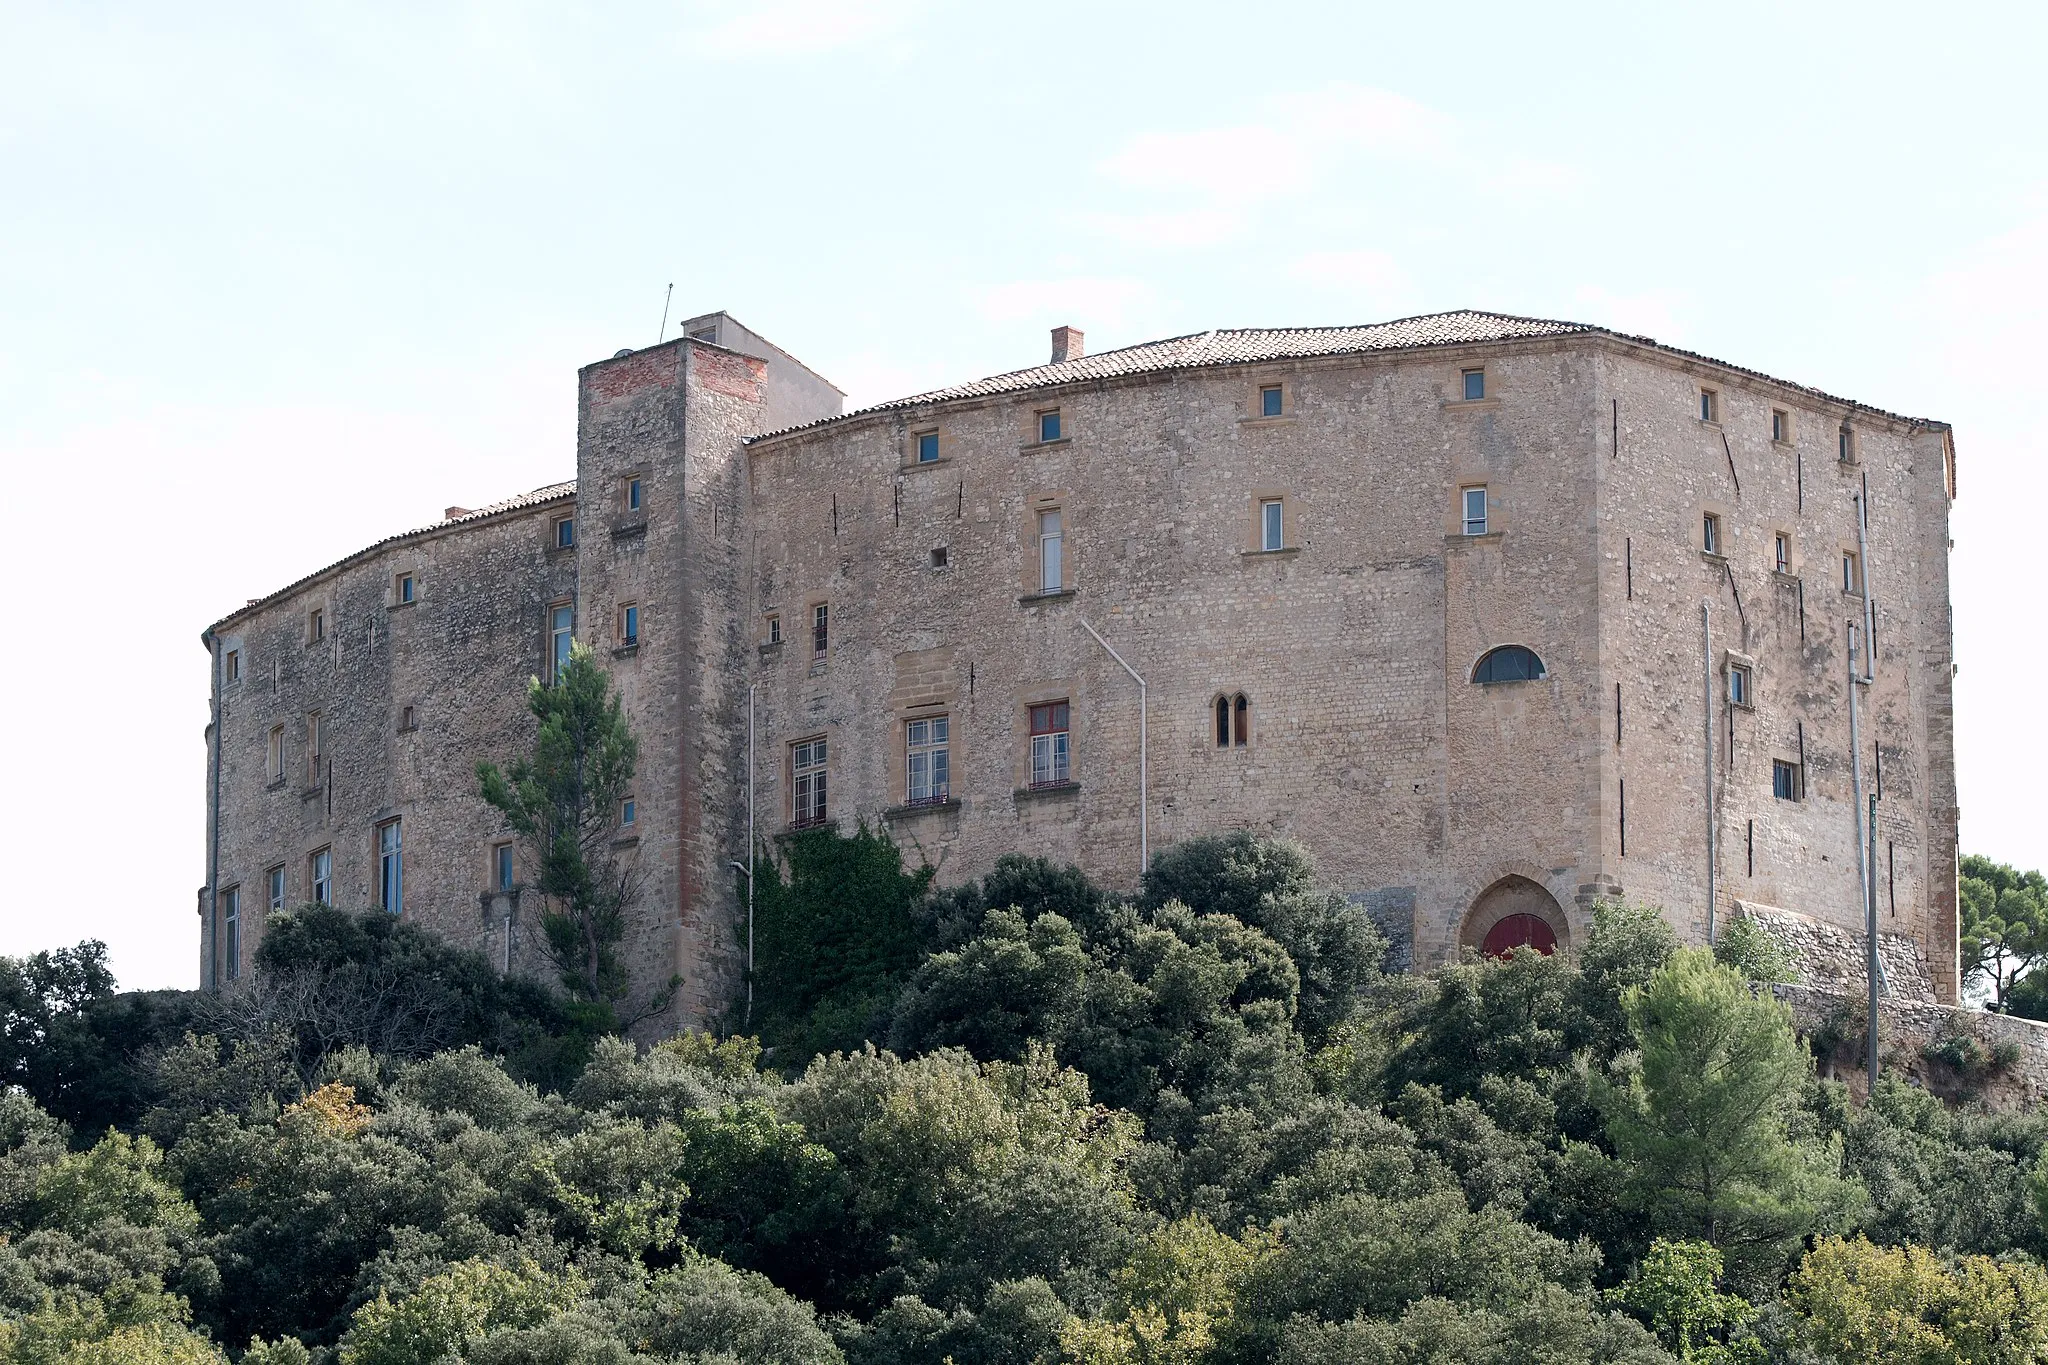 Photo showing: The castle of Meyrargues, Bouches-du-Rhône (France).